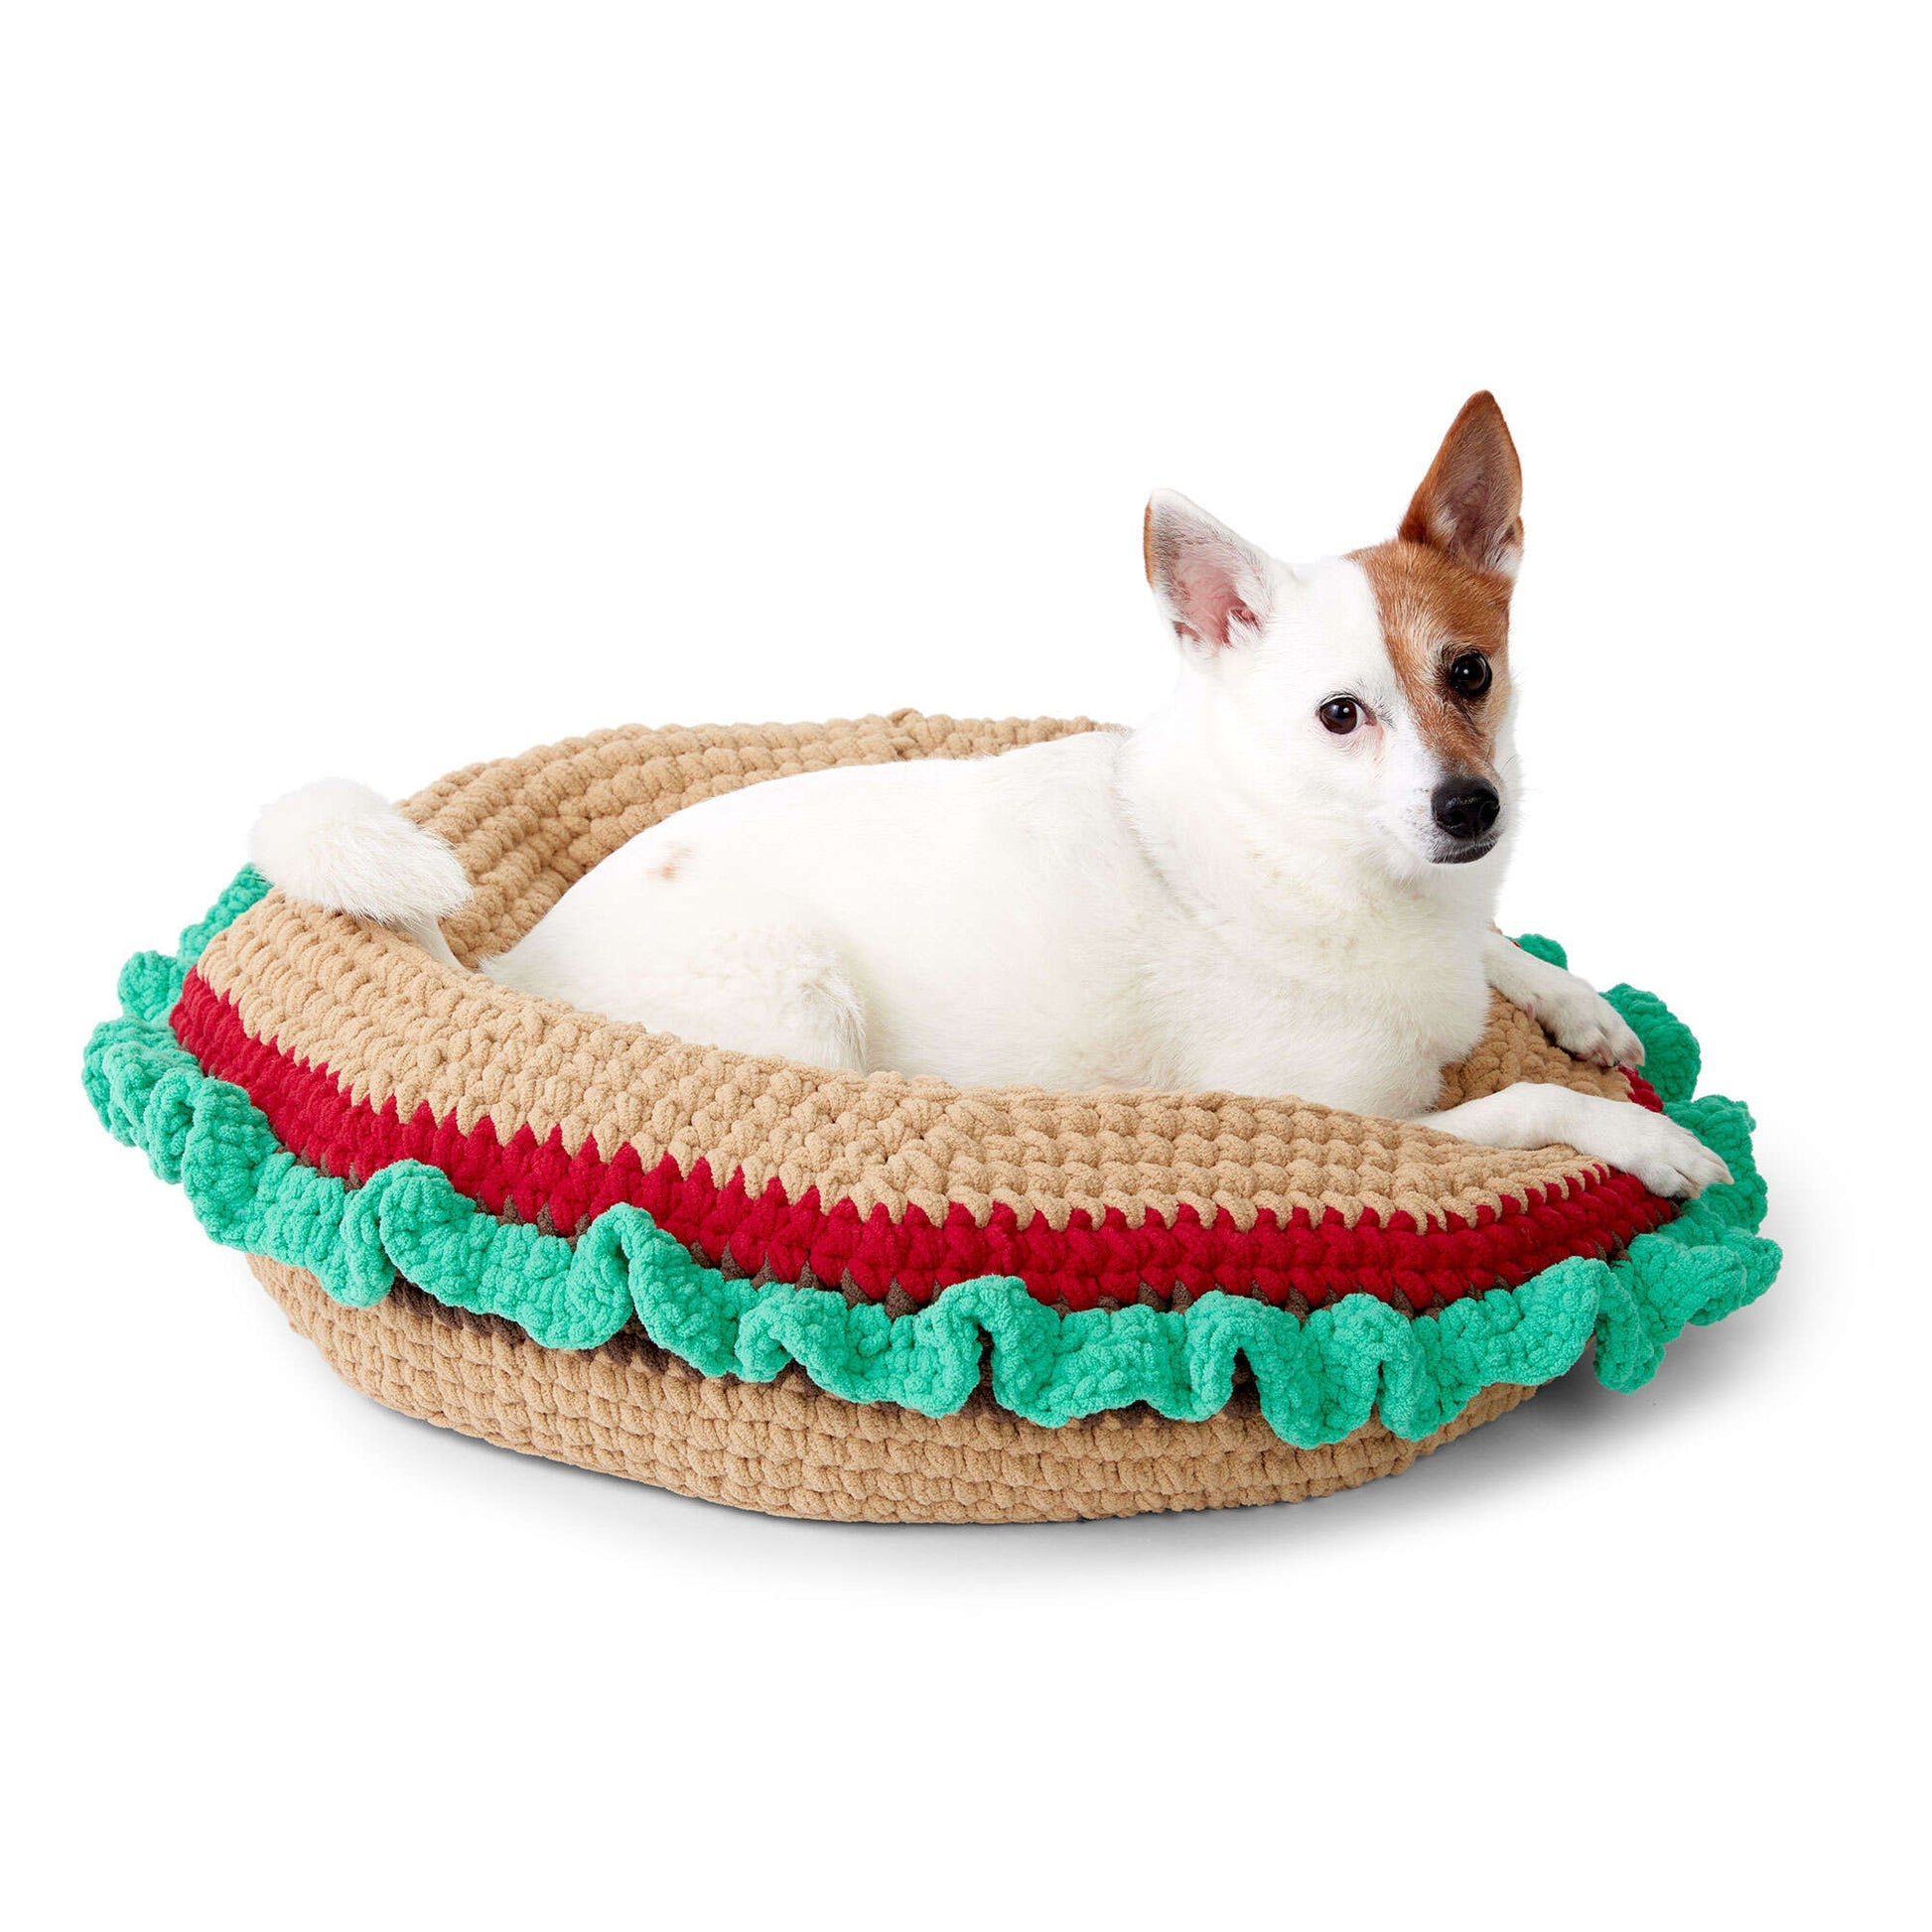 Bernat Crochet Burger Pet Bed Crochet Pet Bed made in Bernat Blanket yarn